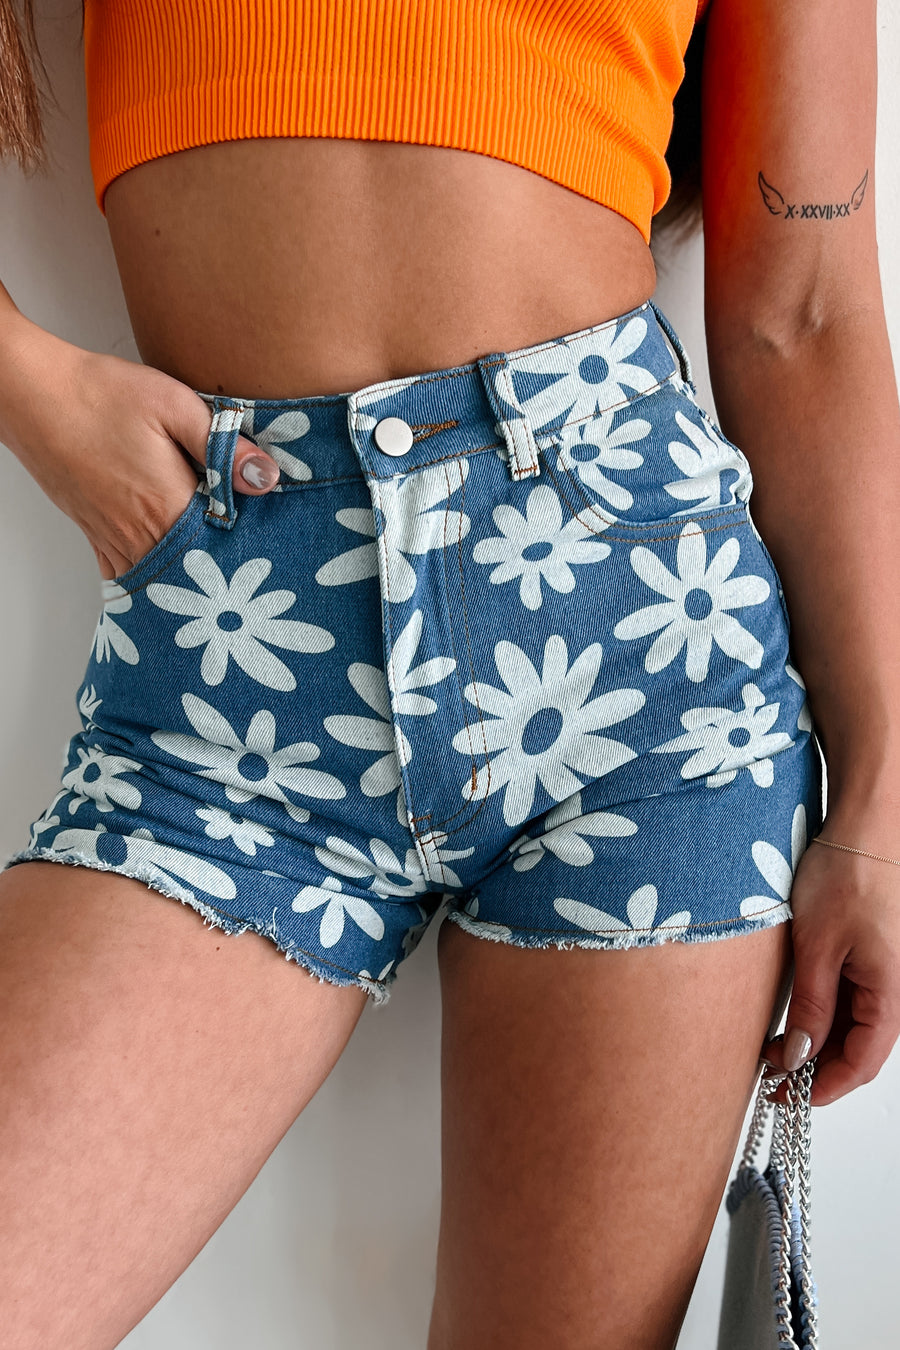 Flowery Feelings Daisy Print Denim Shorts (Blue)